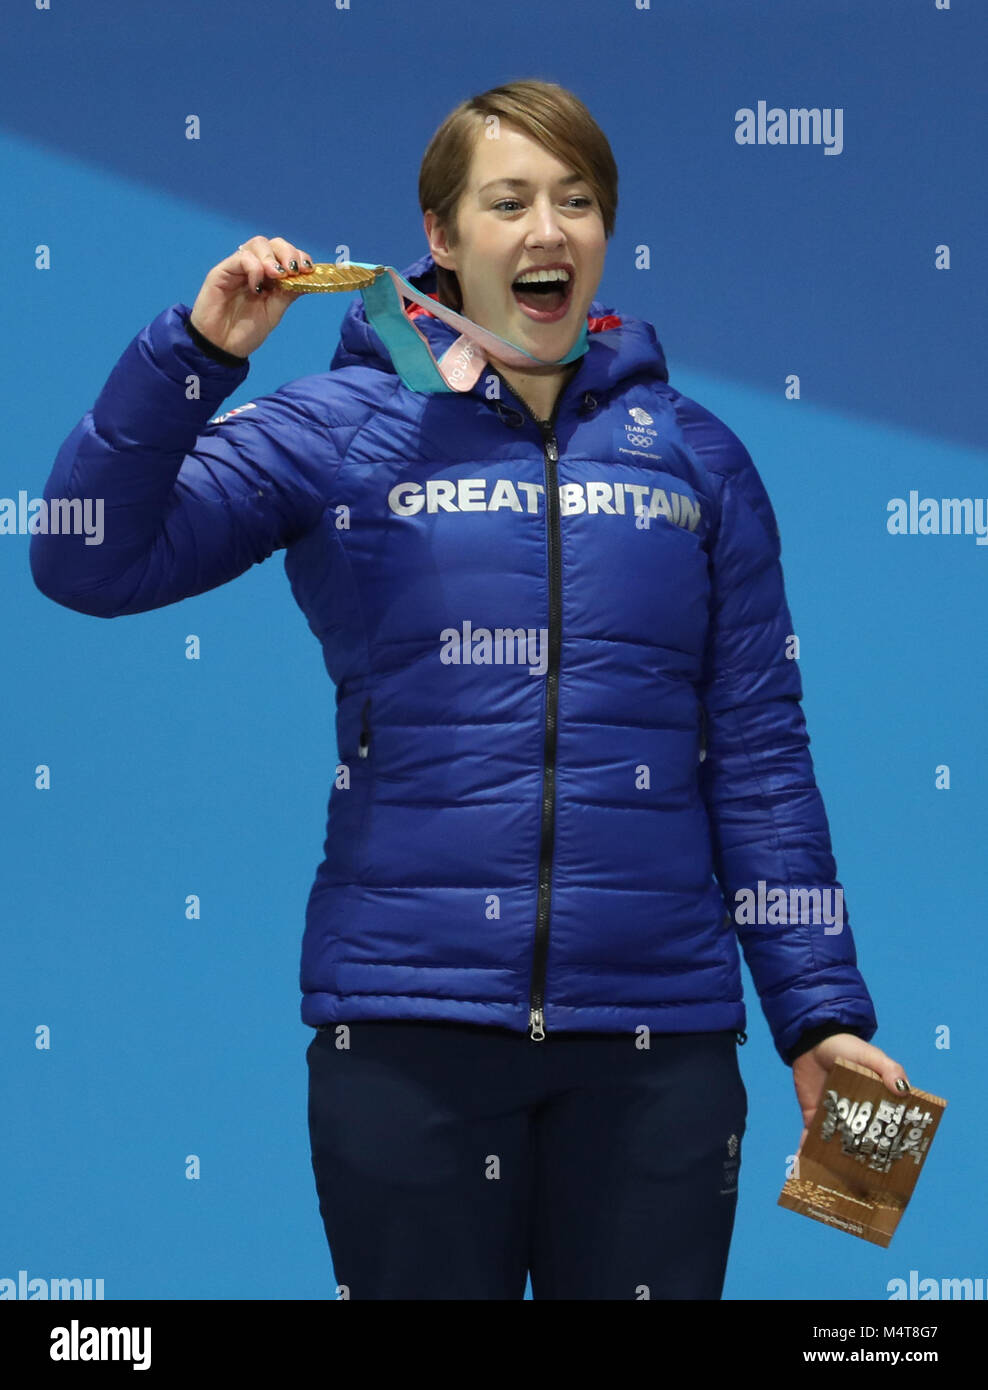 Pyeongchang, PyeongChang. 18th Feb, 2018. Champion Britain's Lizzy Yarnold poses for photos during medal ceremony of women event of skeleton at 2018 PyeongChang Winter Olympic Games at Medal Plaza, PyeongChang, Feb. 18, 2018. Credit: Li Gang/Xinhua/Alamy Live News Stock Photo